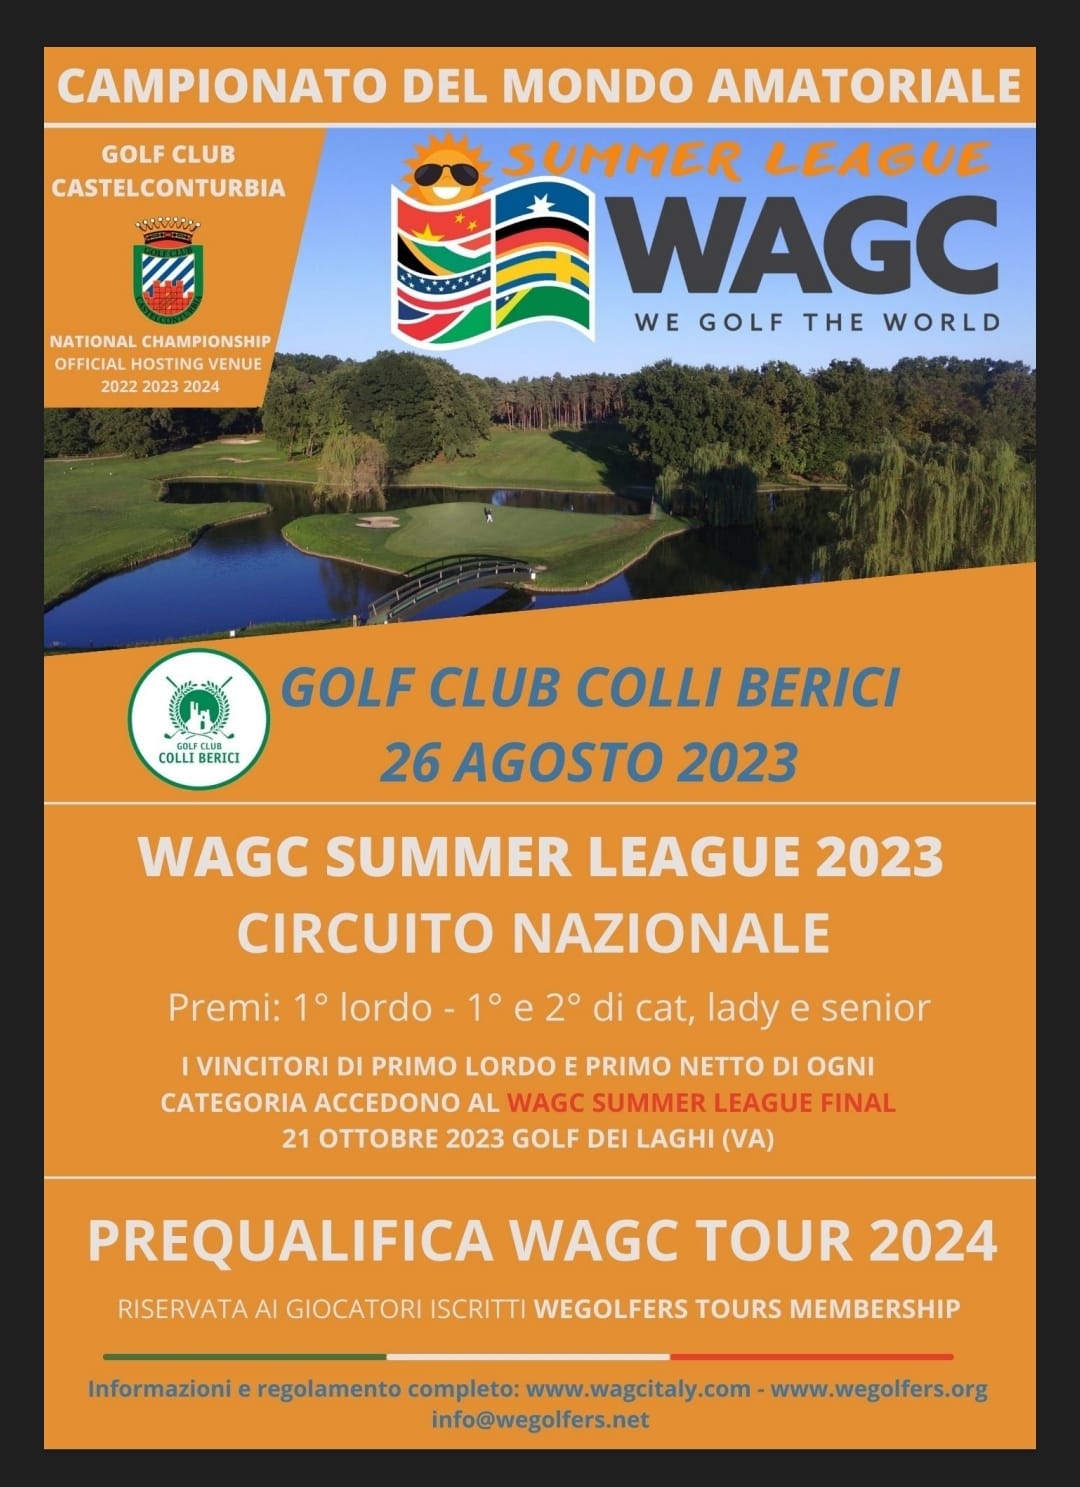 WAGC Tour 2023 Summer League